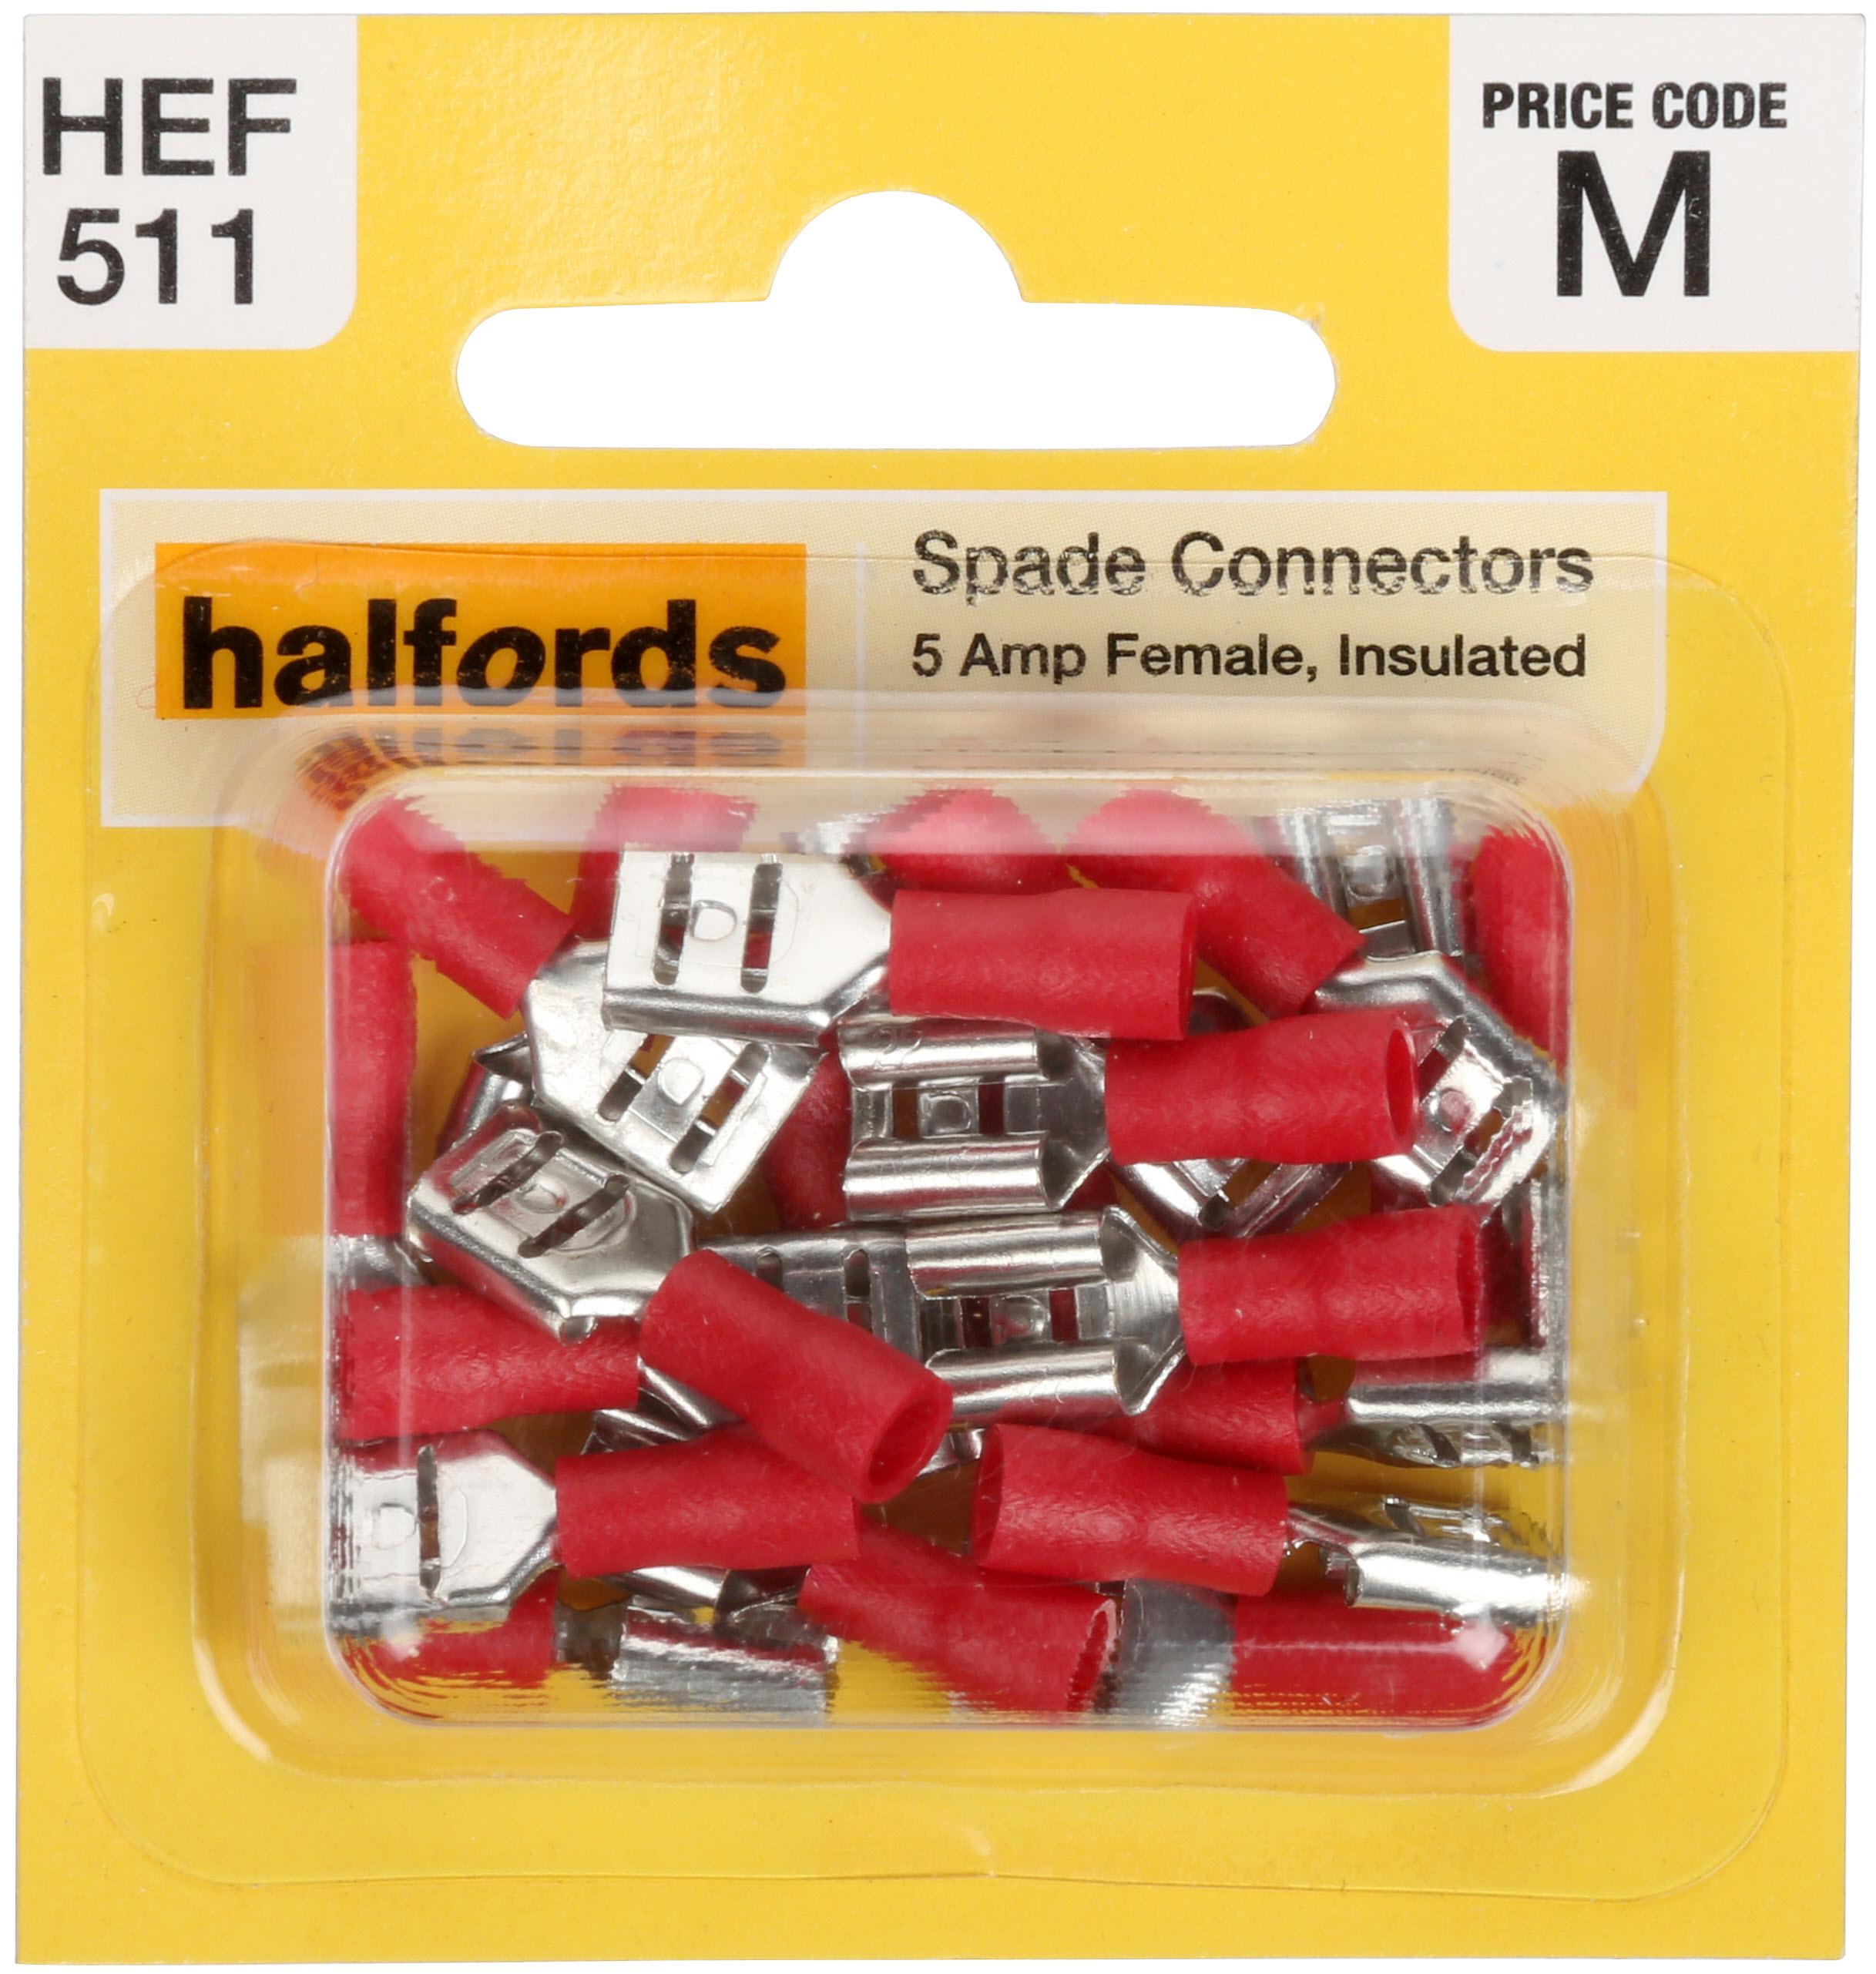 Halfords Spade Connectors (Hef511) 5 Amp/Female